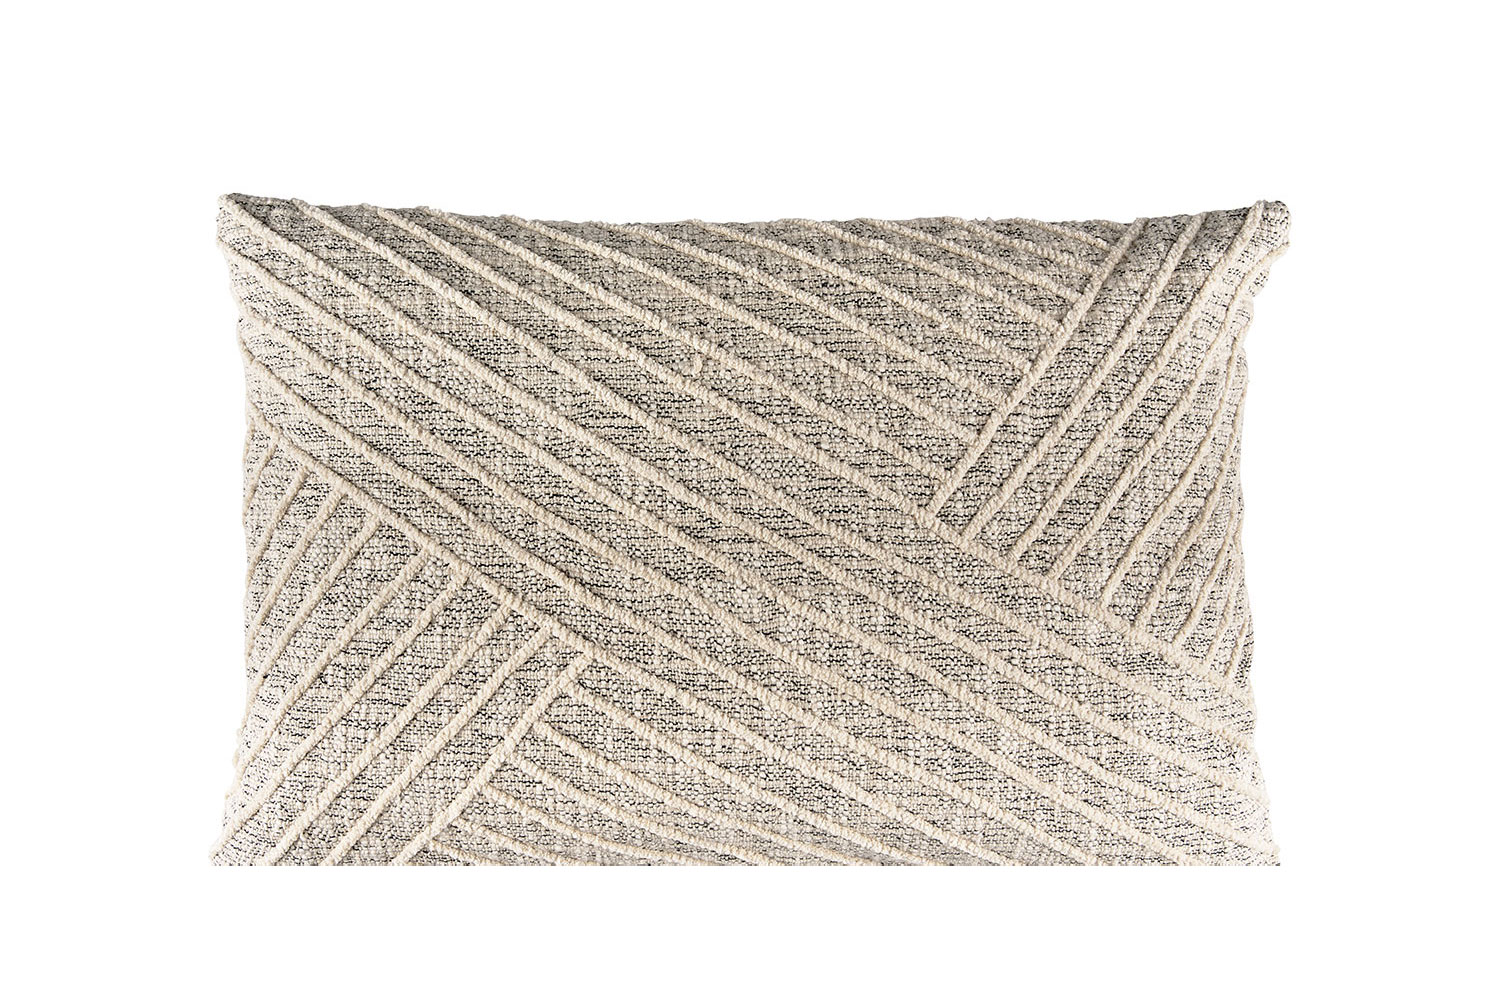 Striped Cotton Pillow